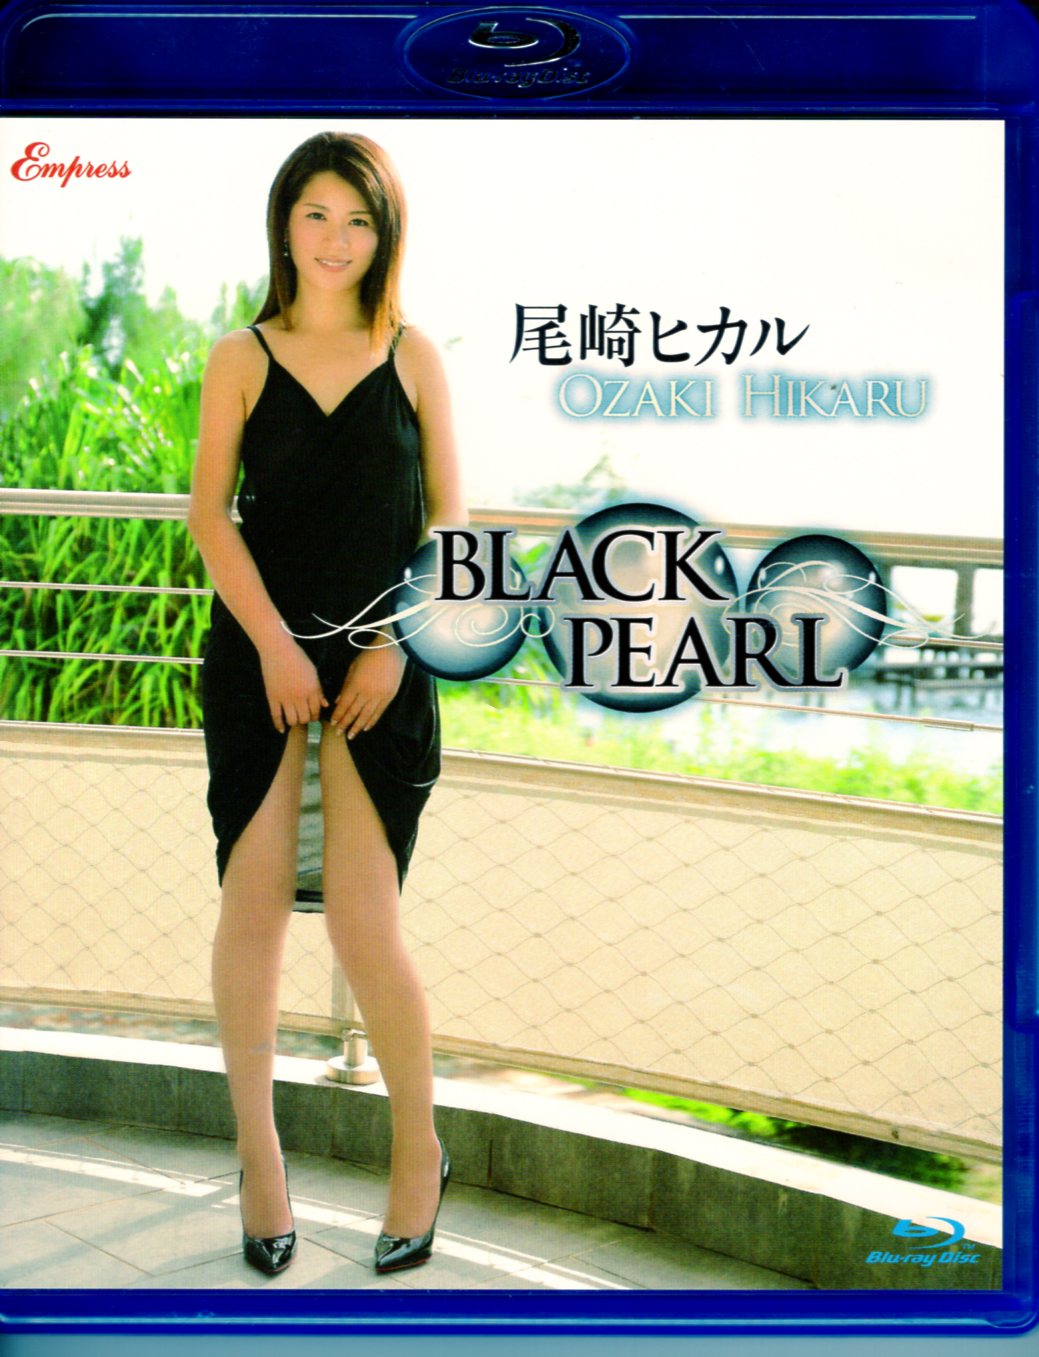 Kingdom Blu-ray Hikaru Ozaki BLACK PEARL | MANDARAKE 在线商店